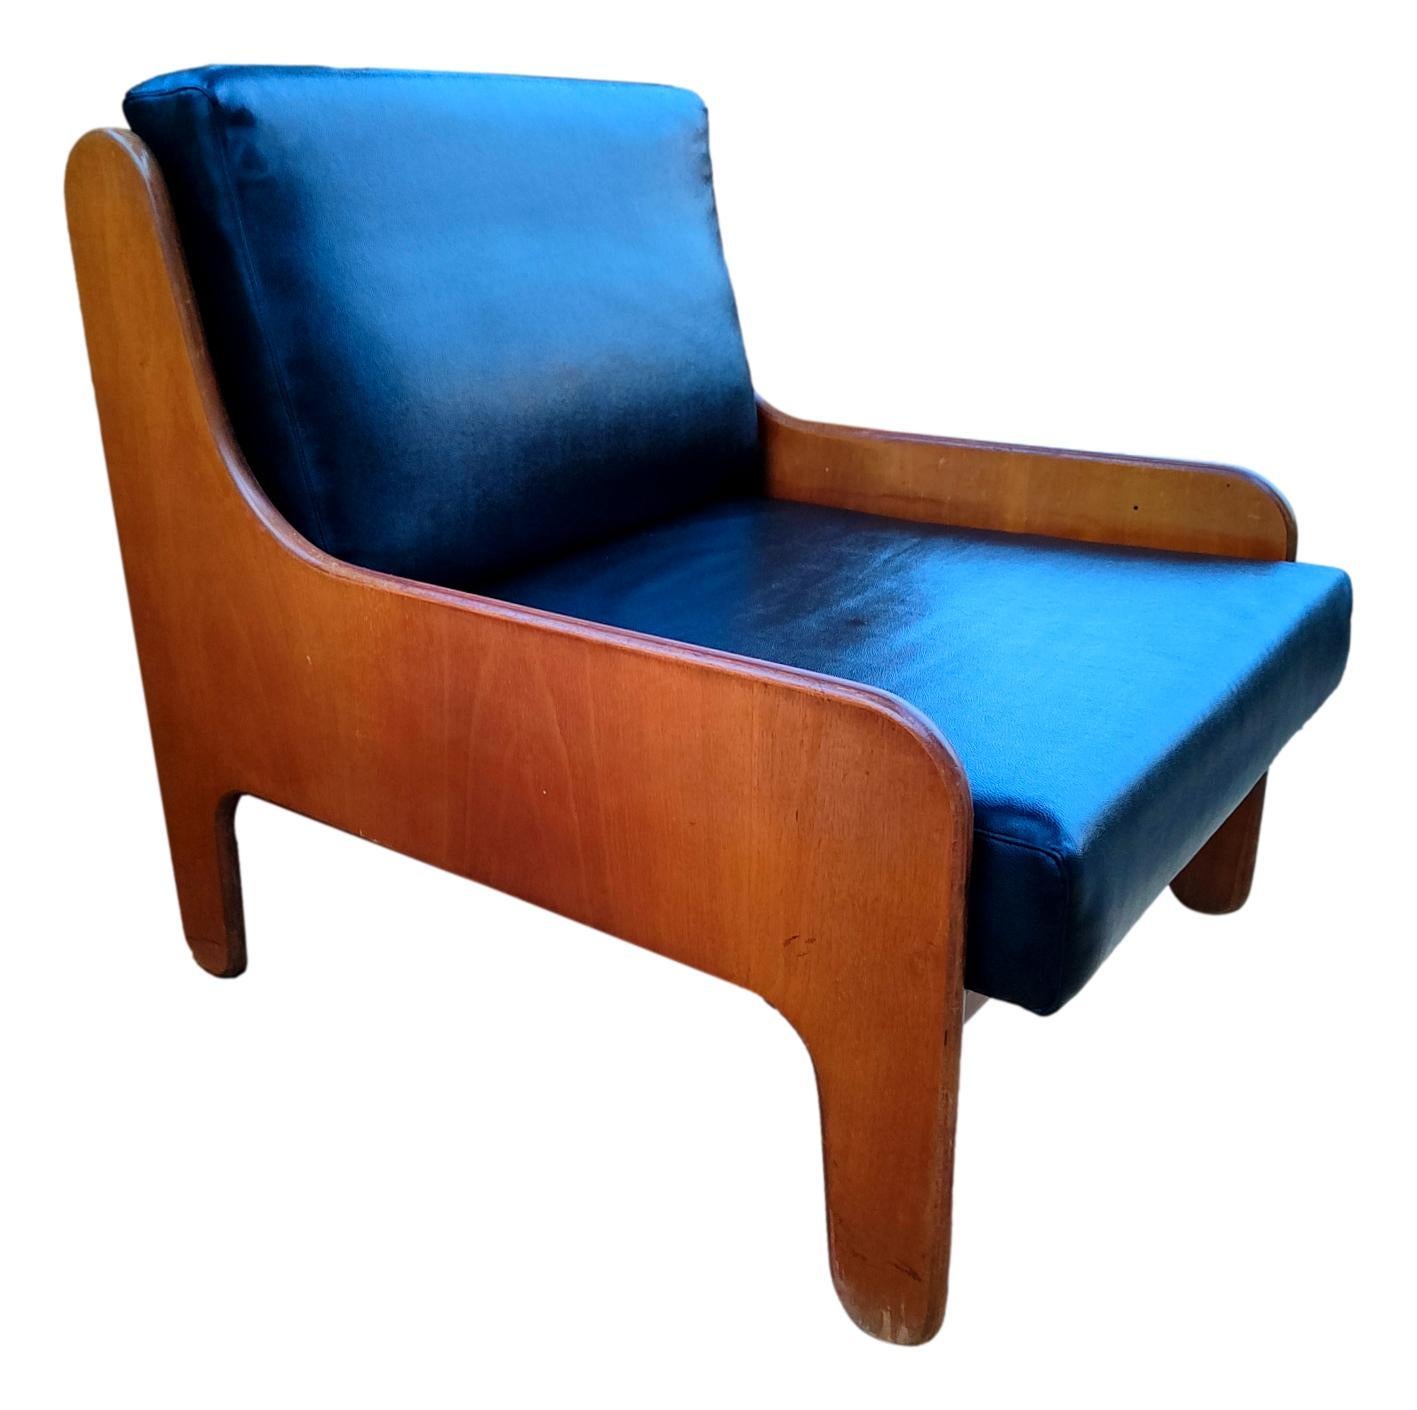 Laminated arflex armchair baronet model design marco zanuso 1964 For Sale